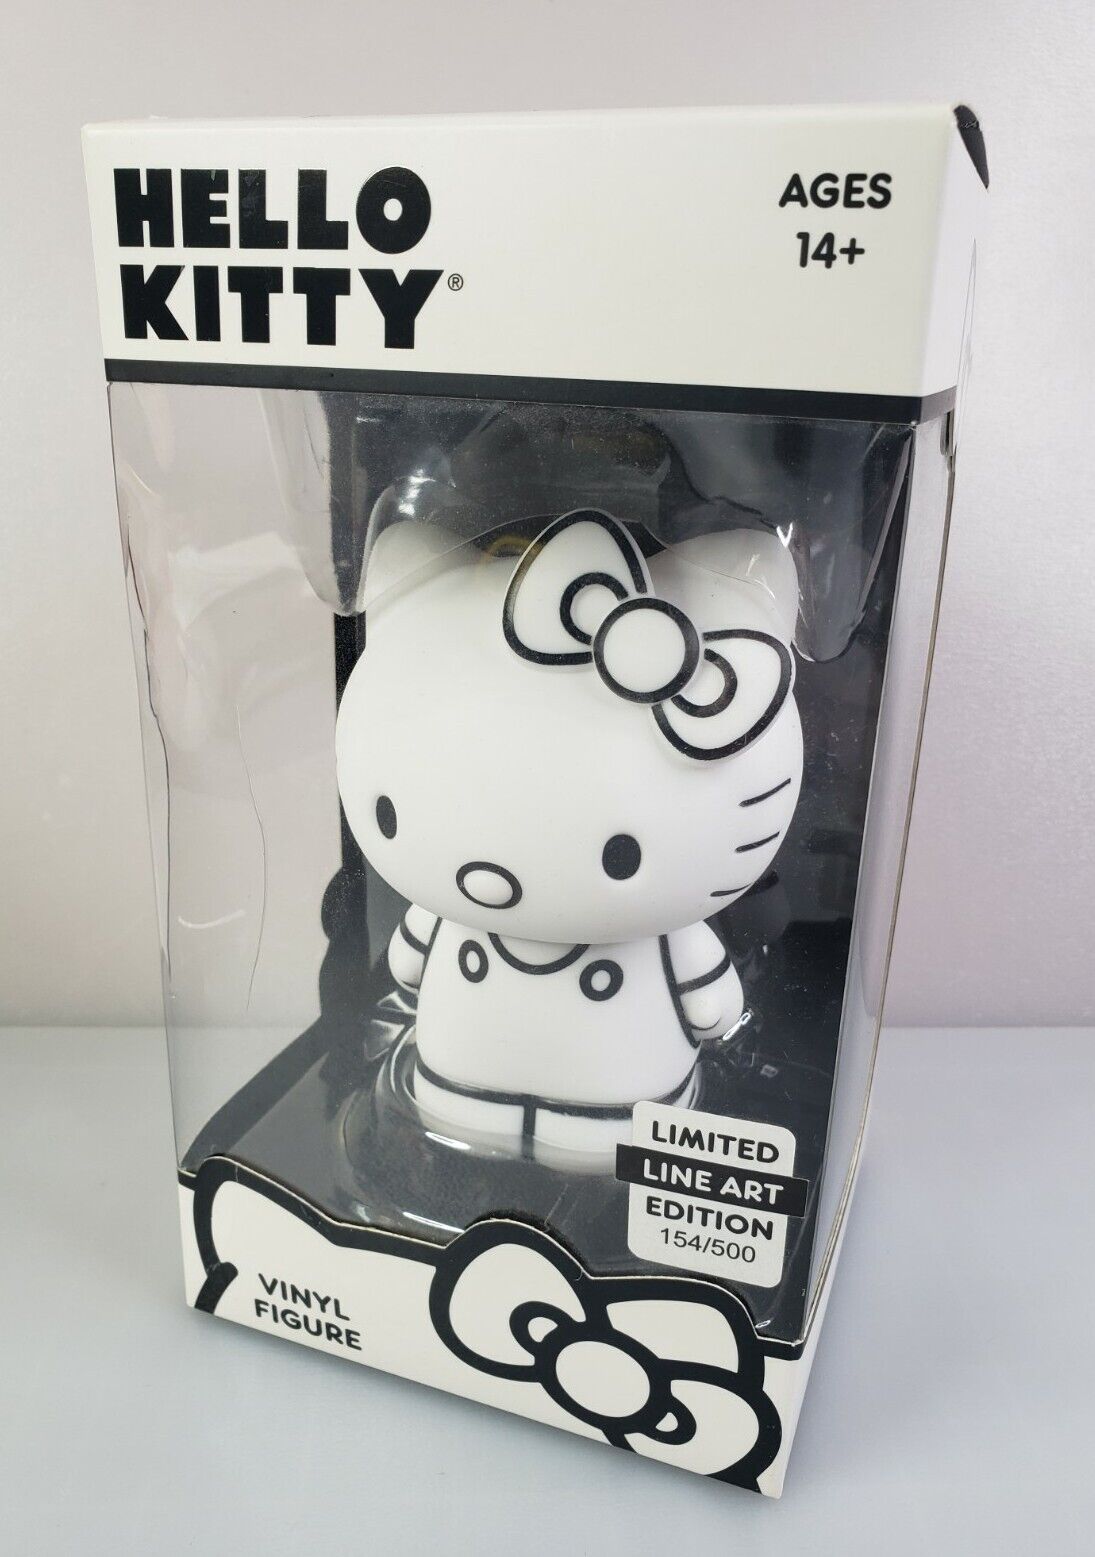 RARE Hello Kitty Vinyl Figure Limited Line Art Edition #154 / 500 New GIFT LOOK